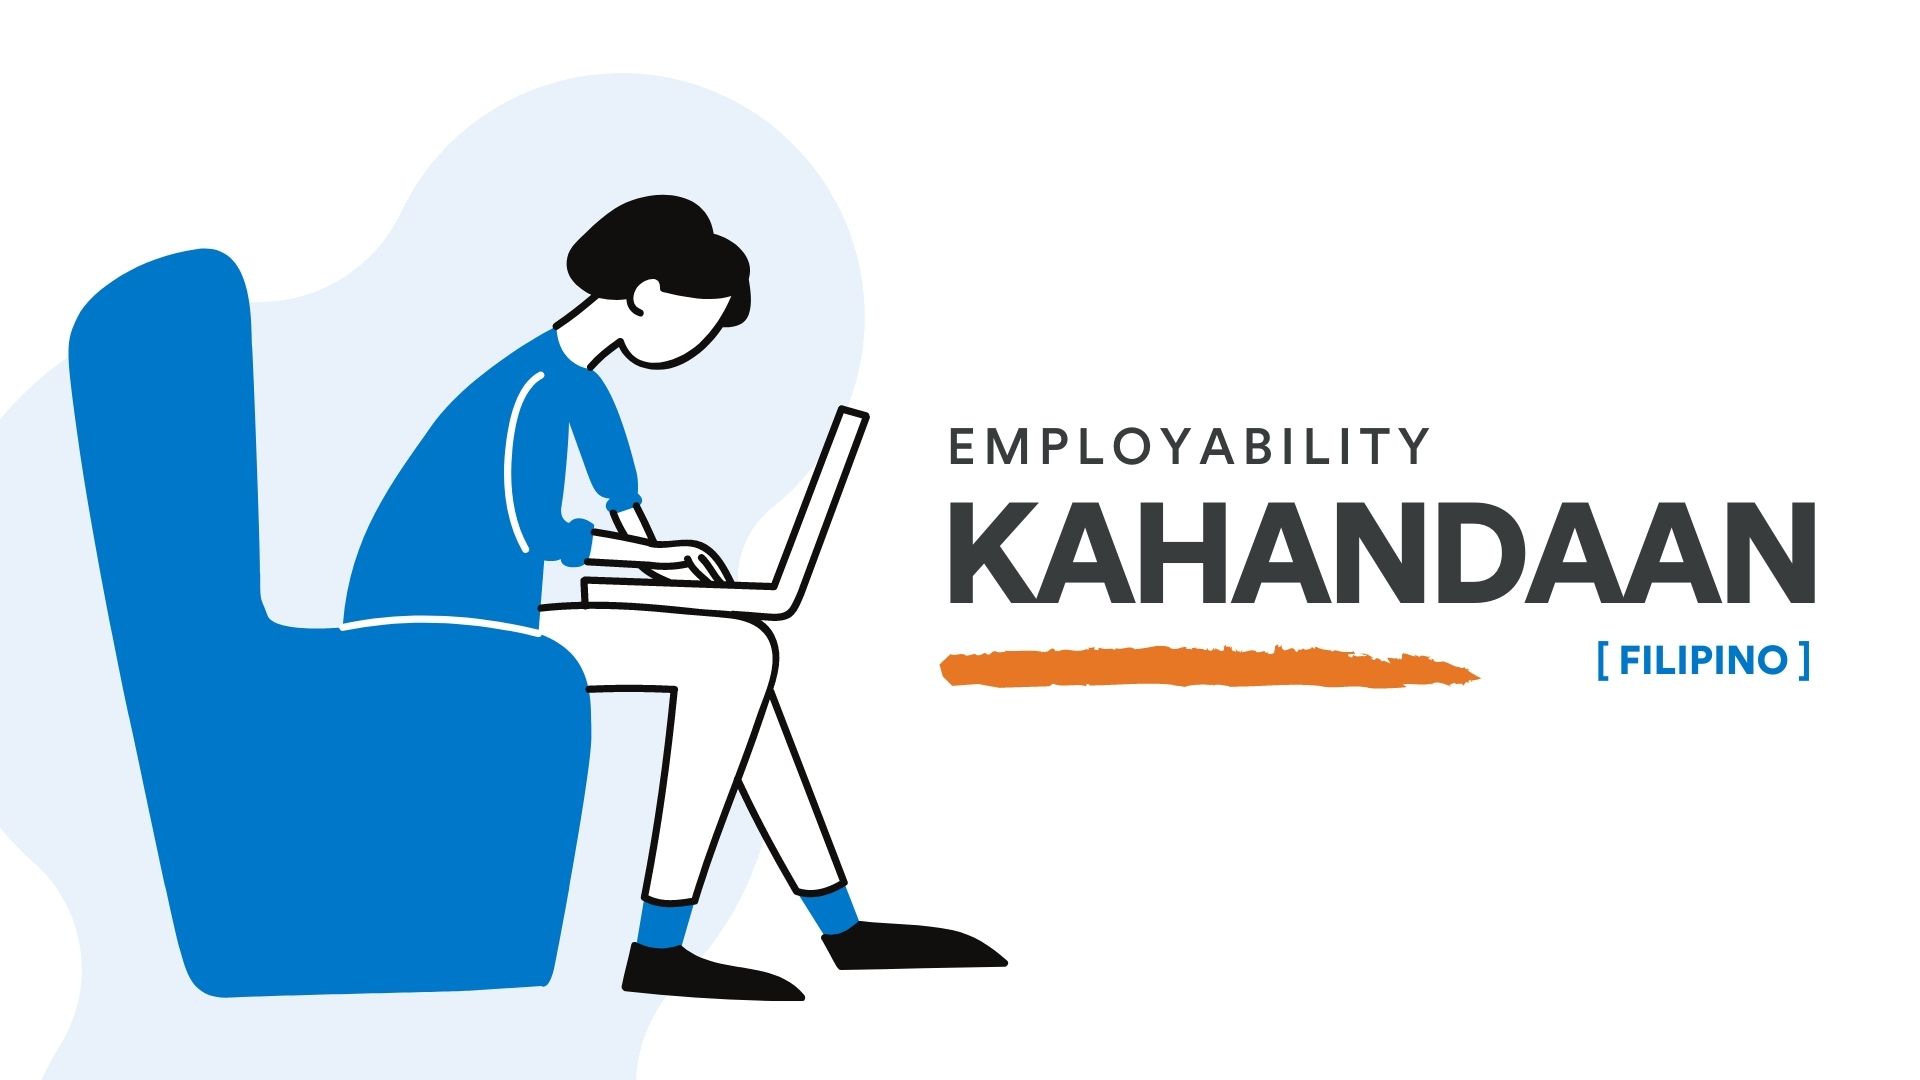 Kahandaan: Employability [Filipino]